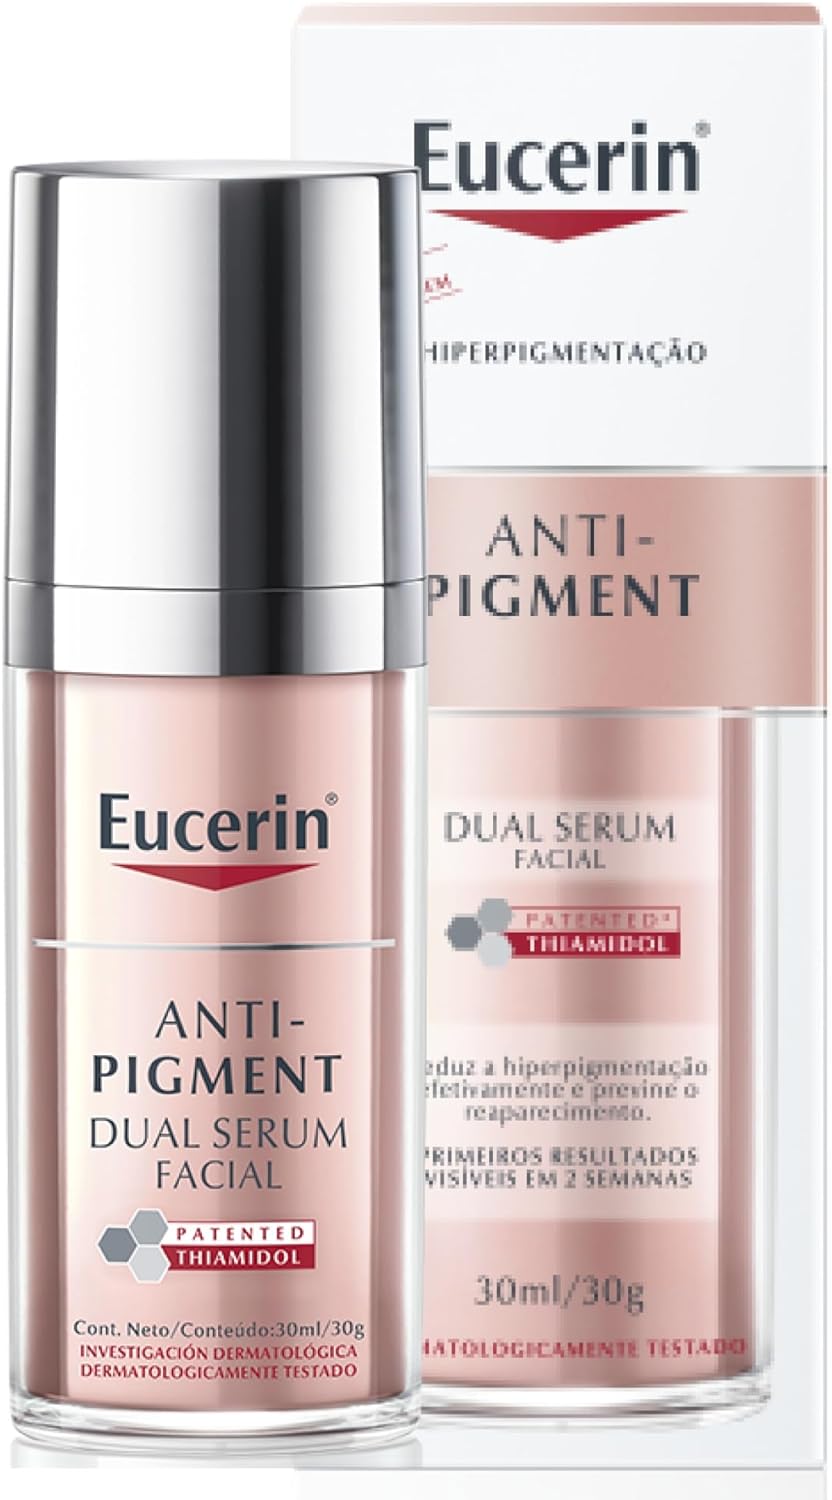 Eucerin Anti-Pigment como produto de skincare